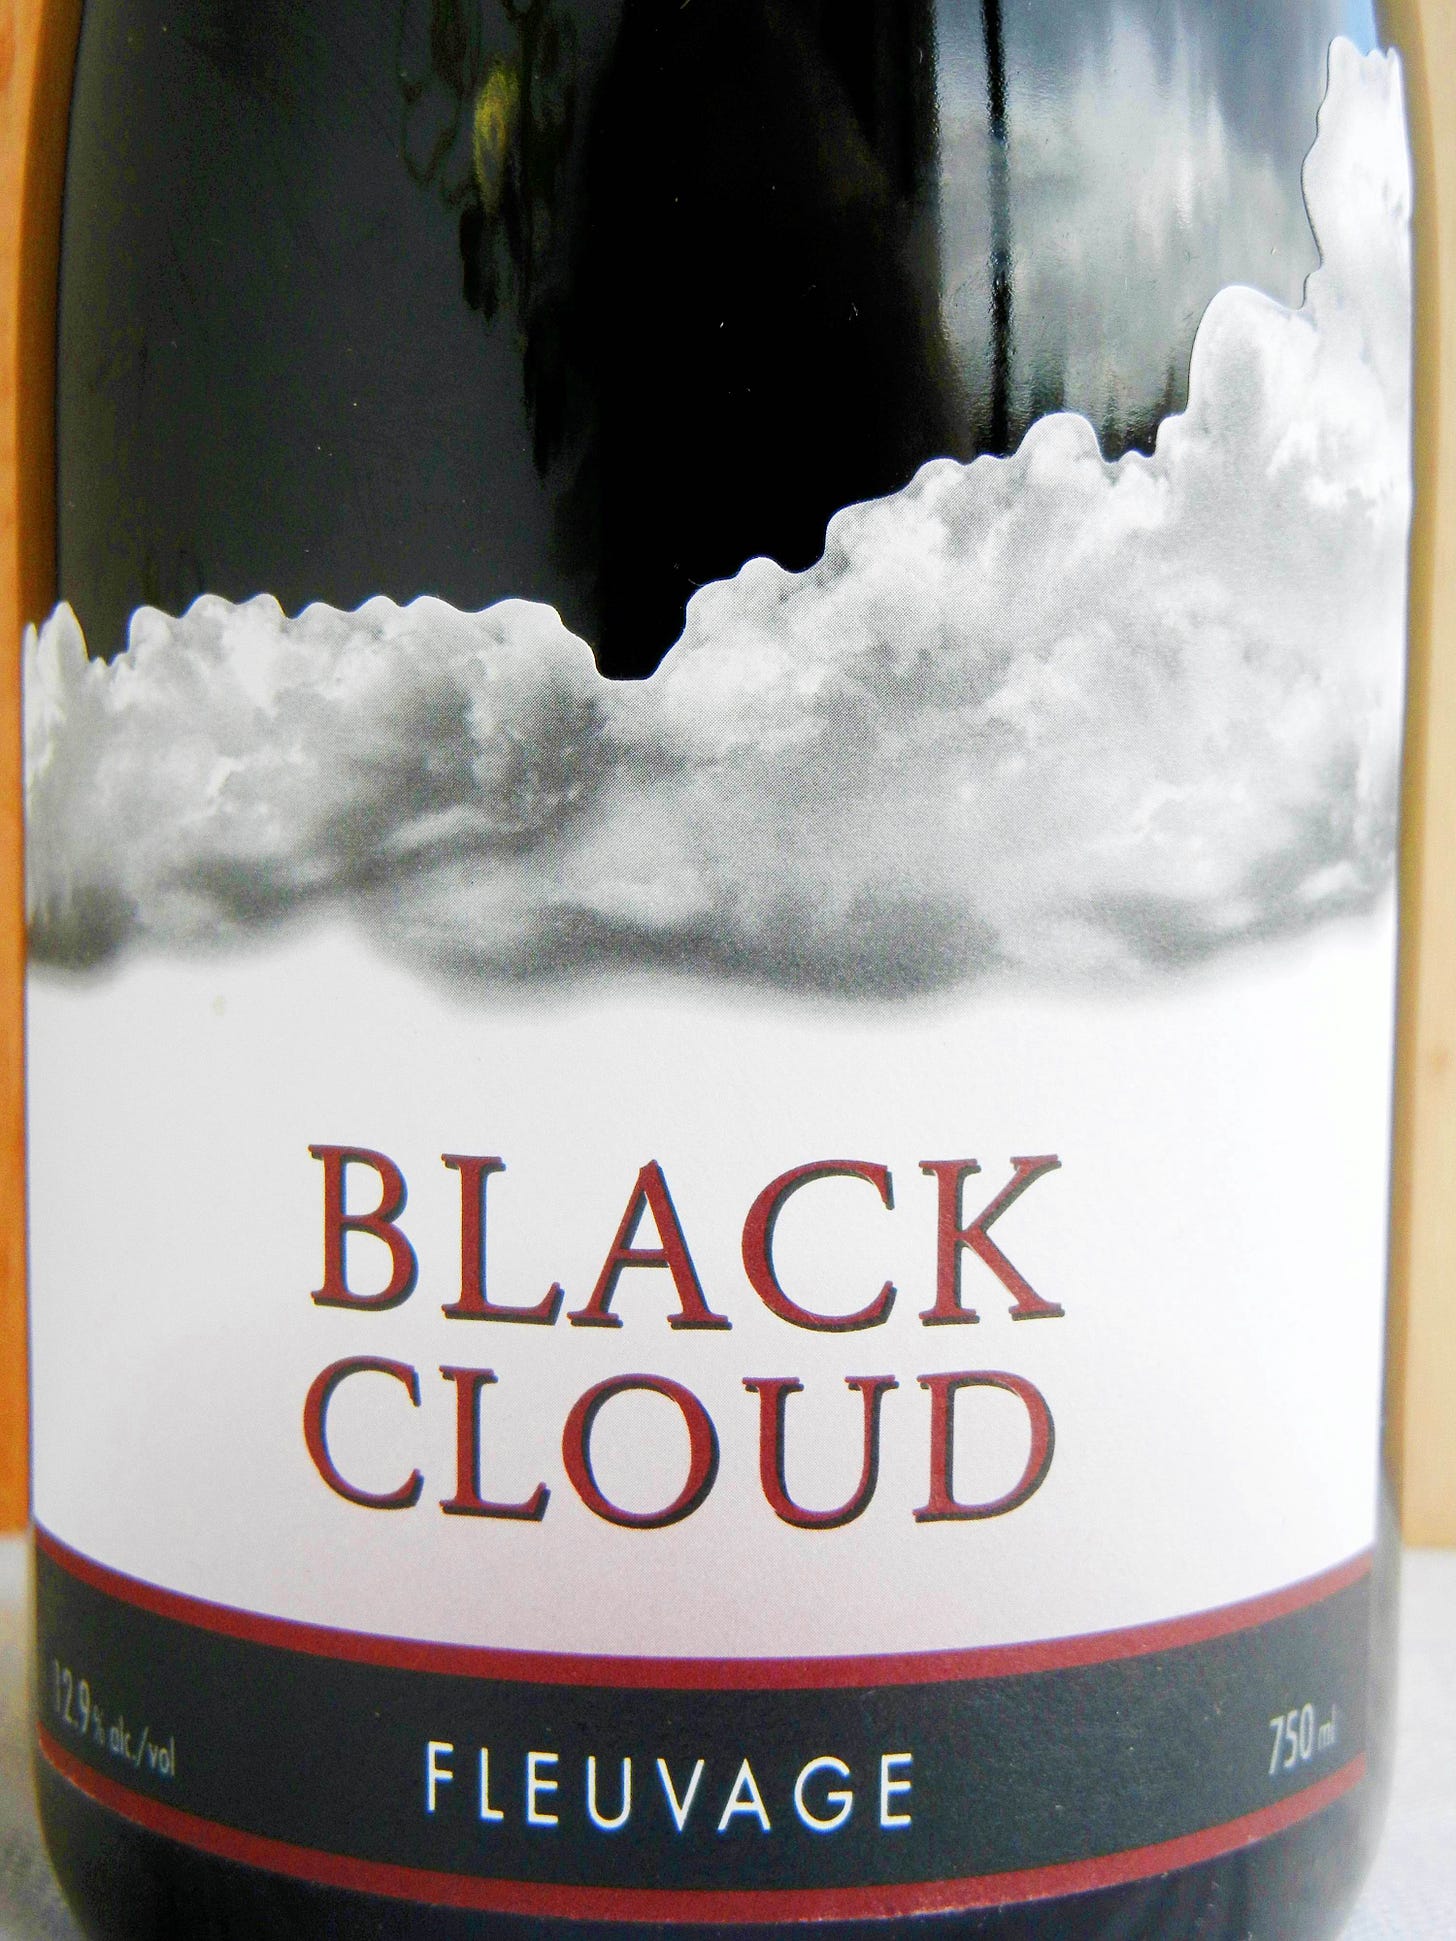 Black Cloud Fleuvage Pinot Noir 2010 Label - BC Pinot Noir Tasting Review 14